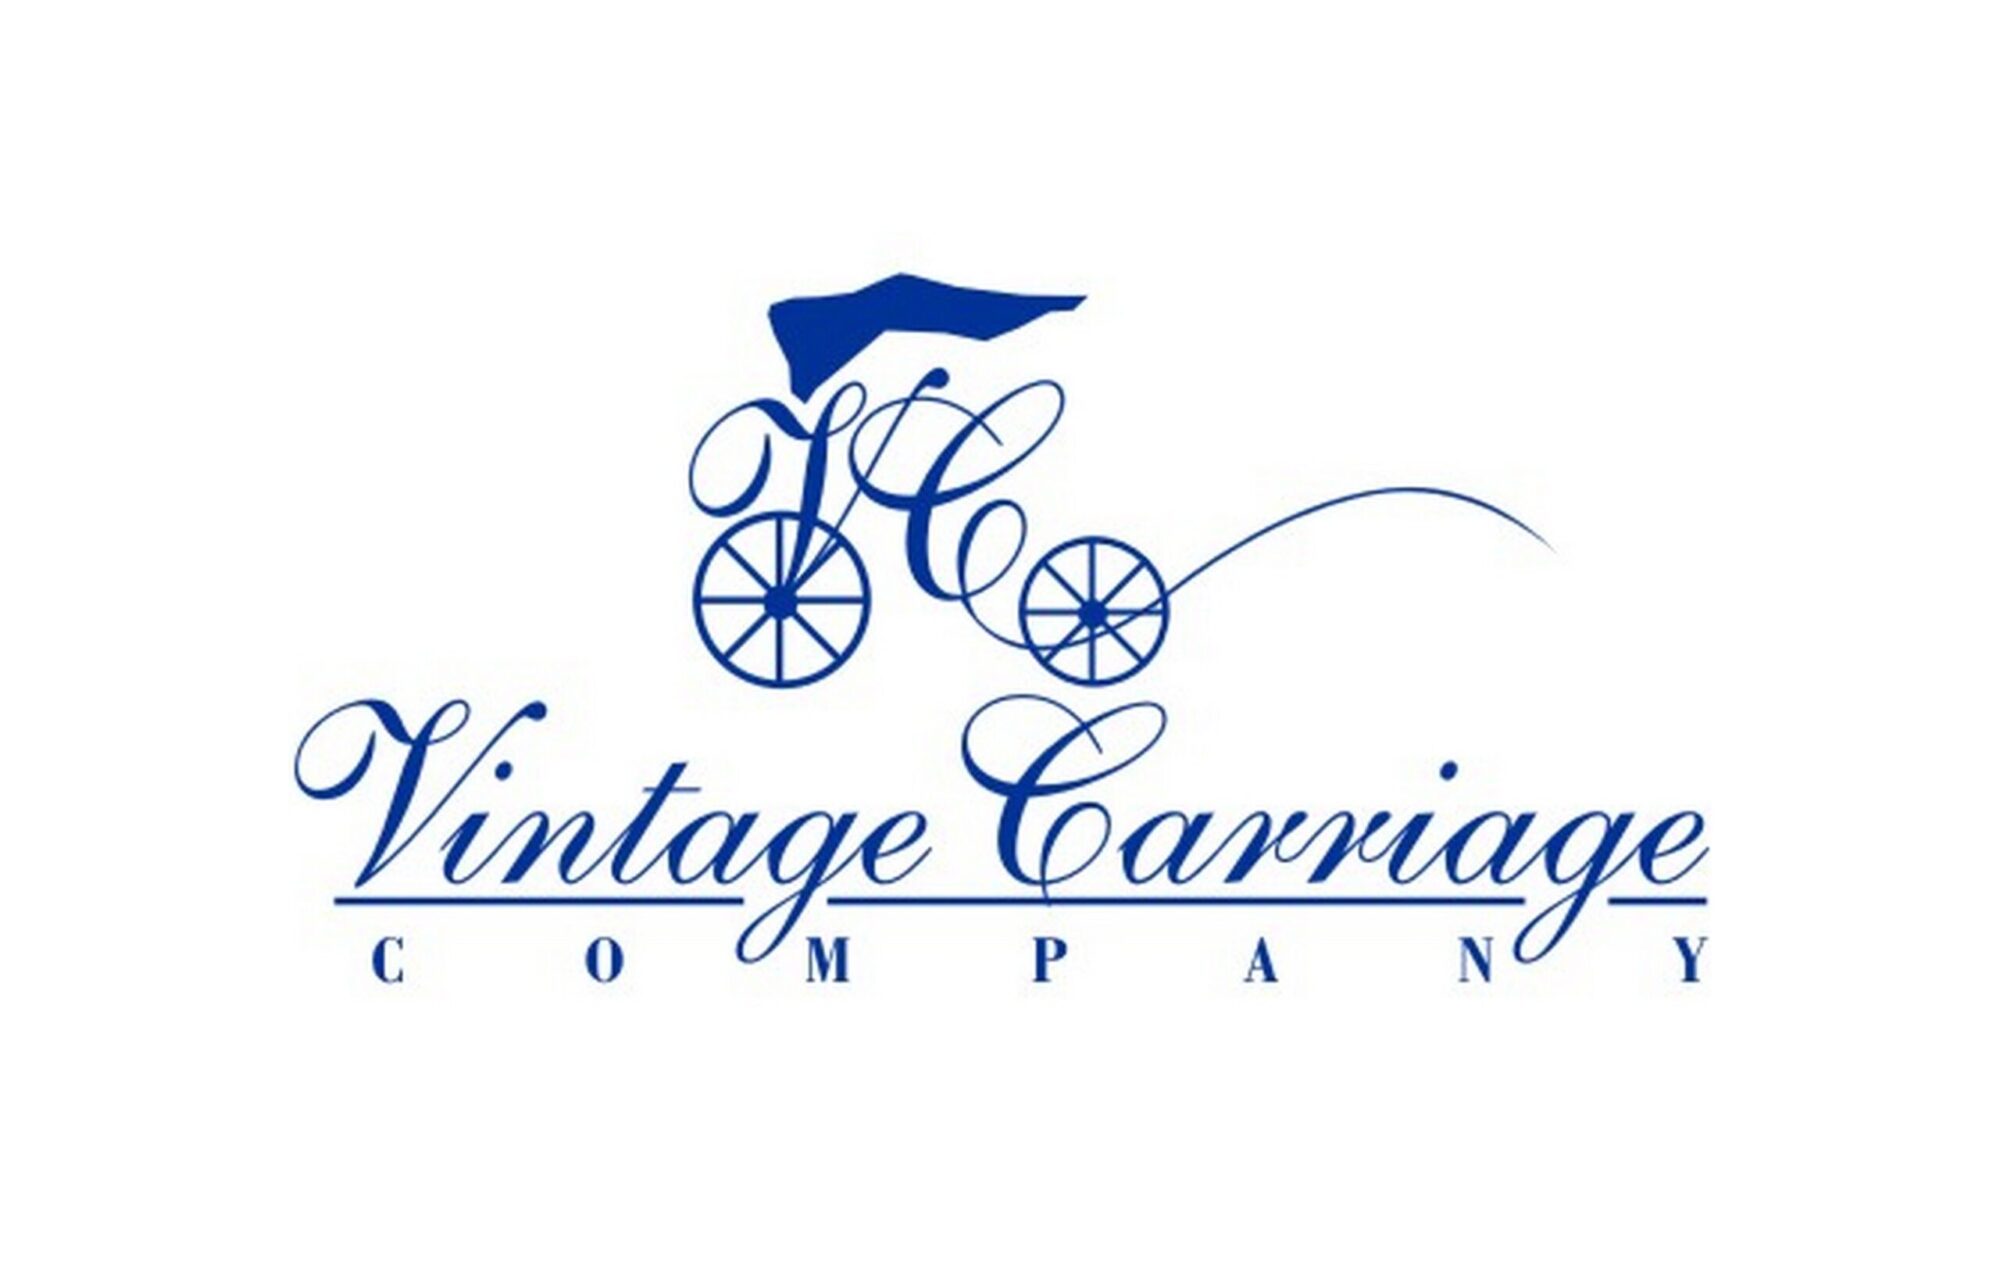 Vintage Carriage Company